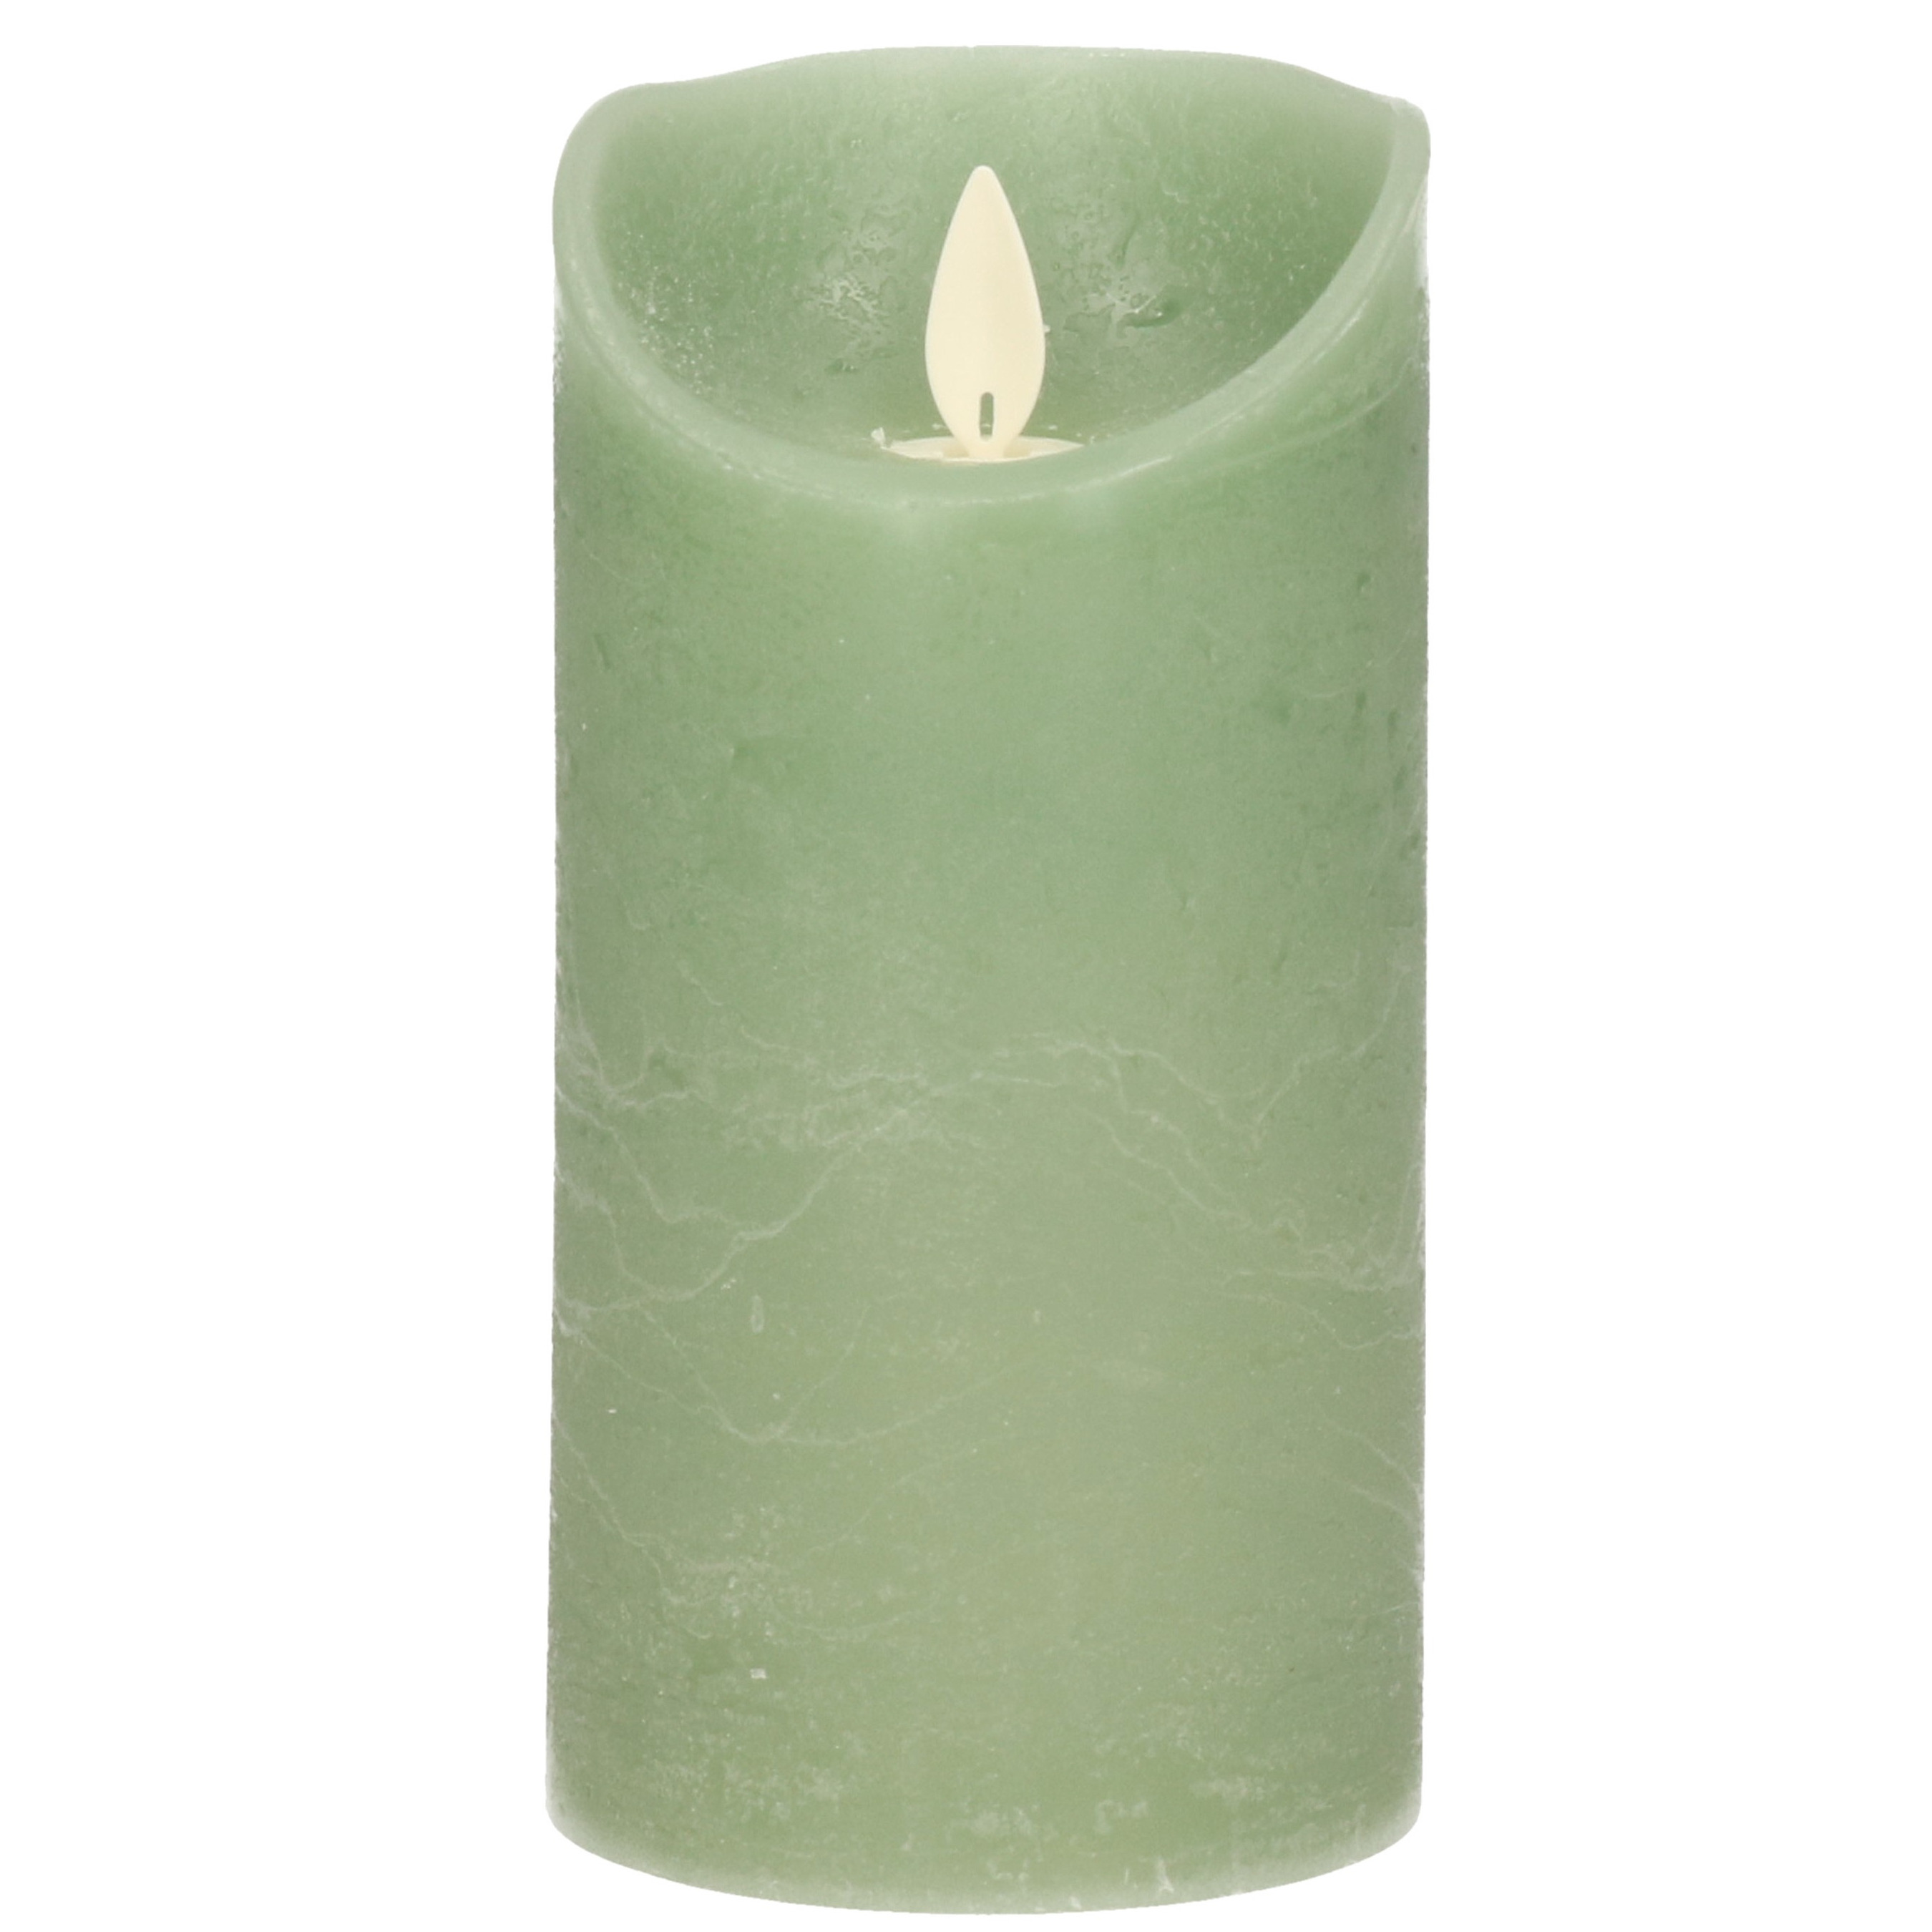 1x Jade groene LED kaarsen - stompkaarsen met bewegende vlam 15 cm